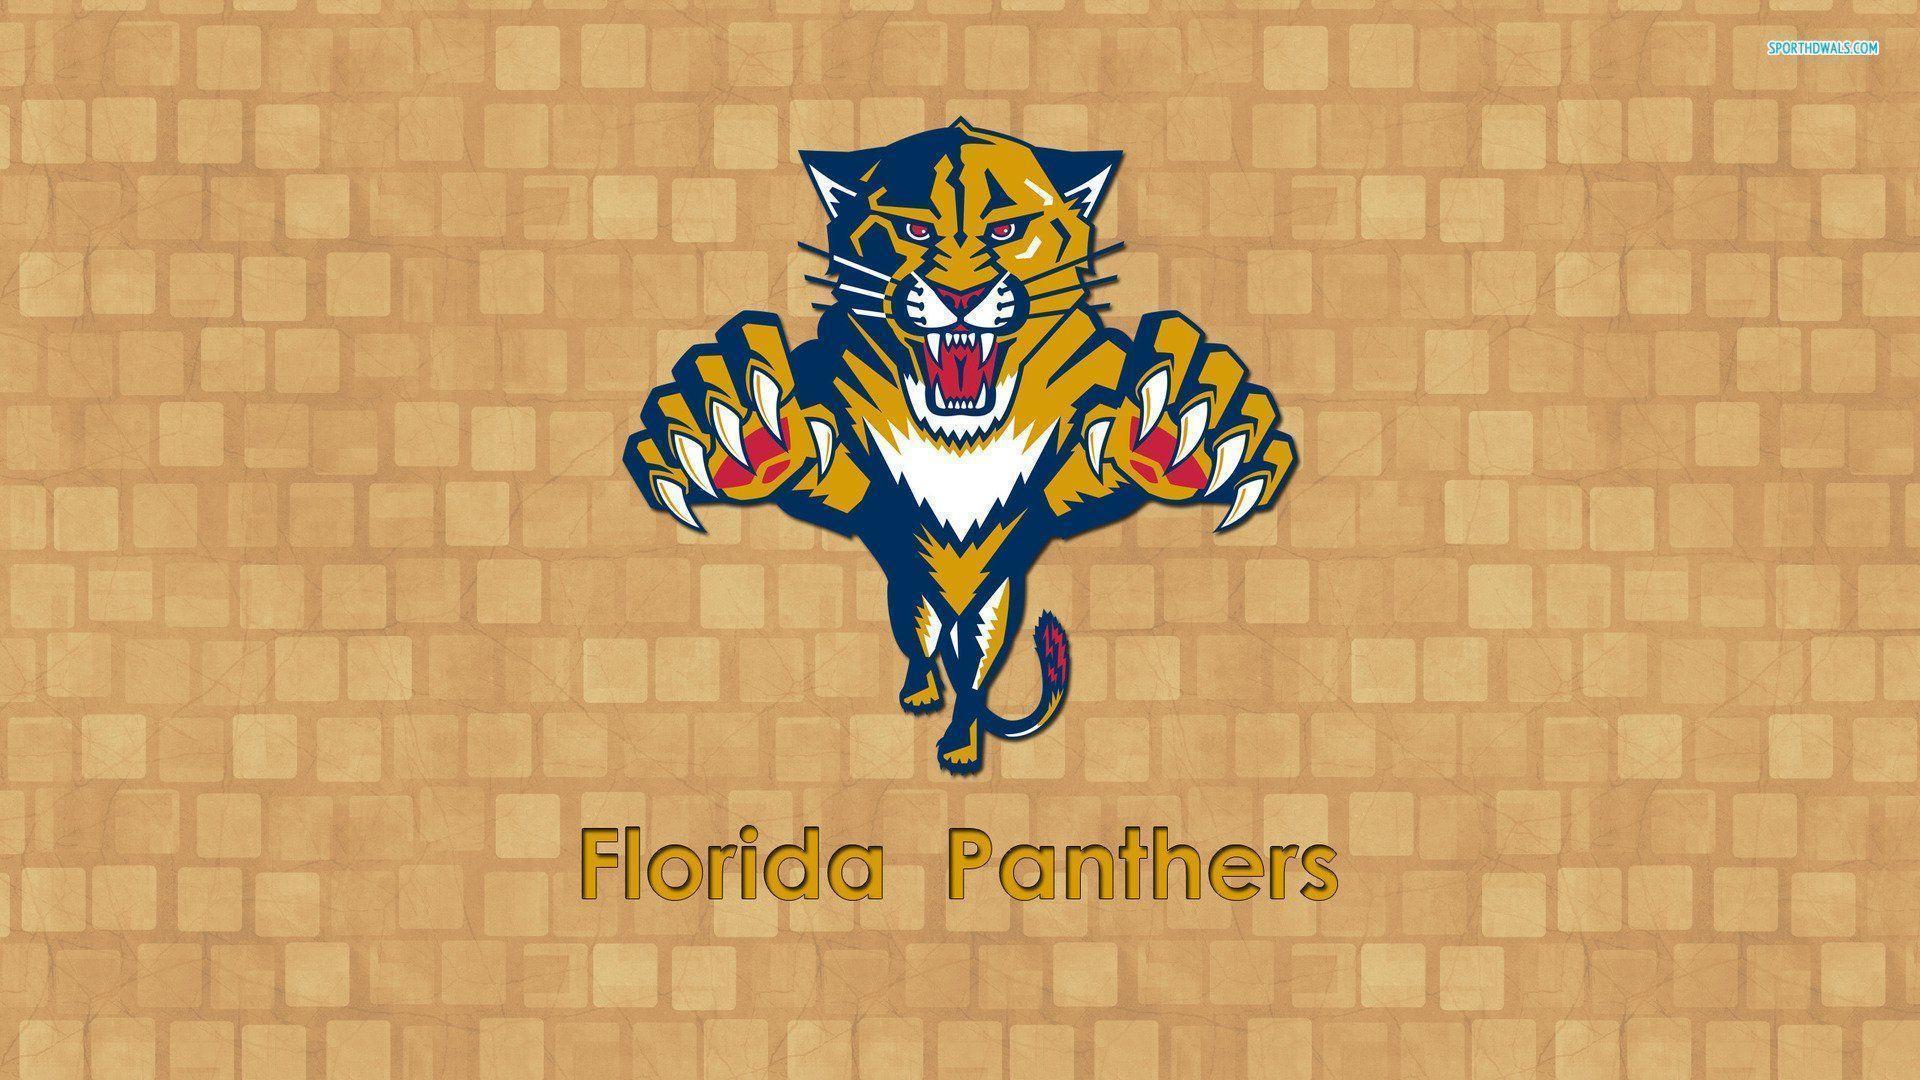 Florida Panthers Wallpaper